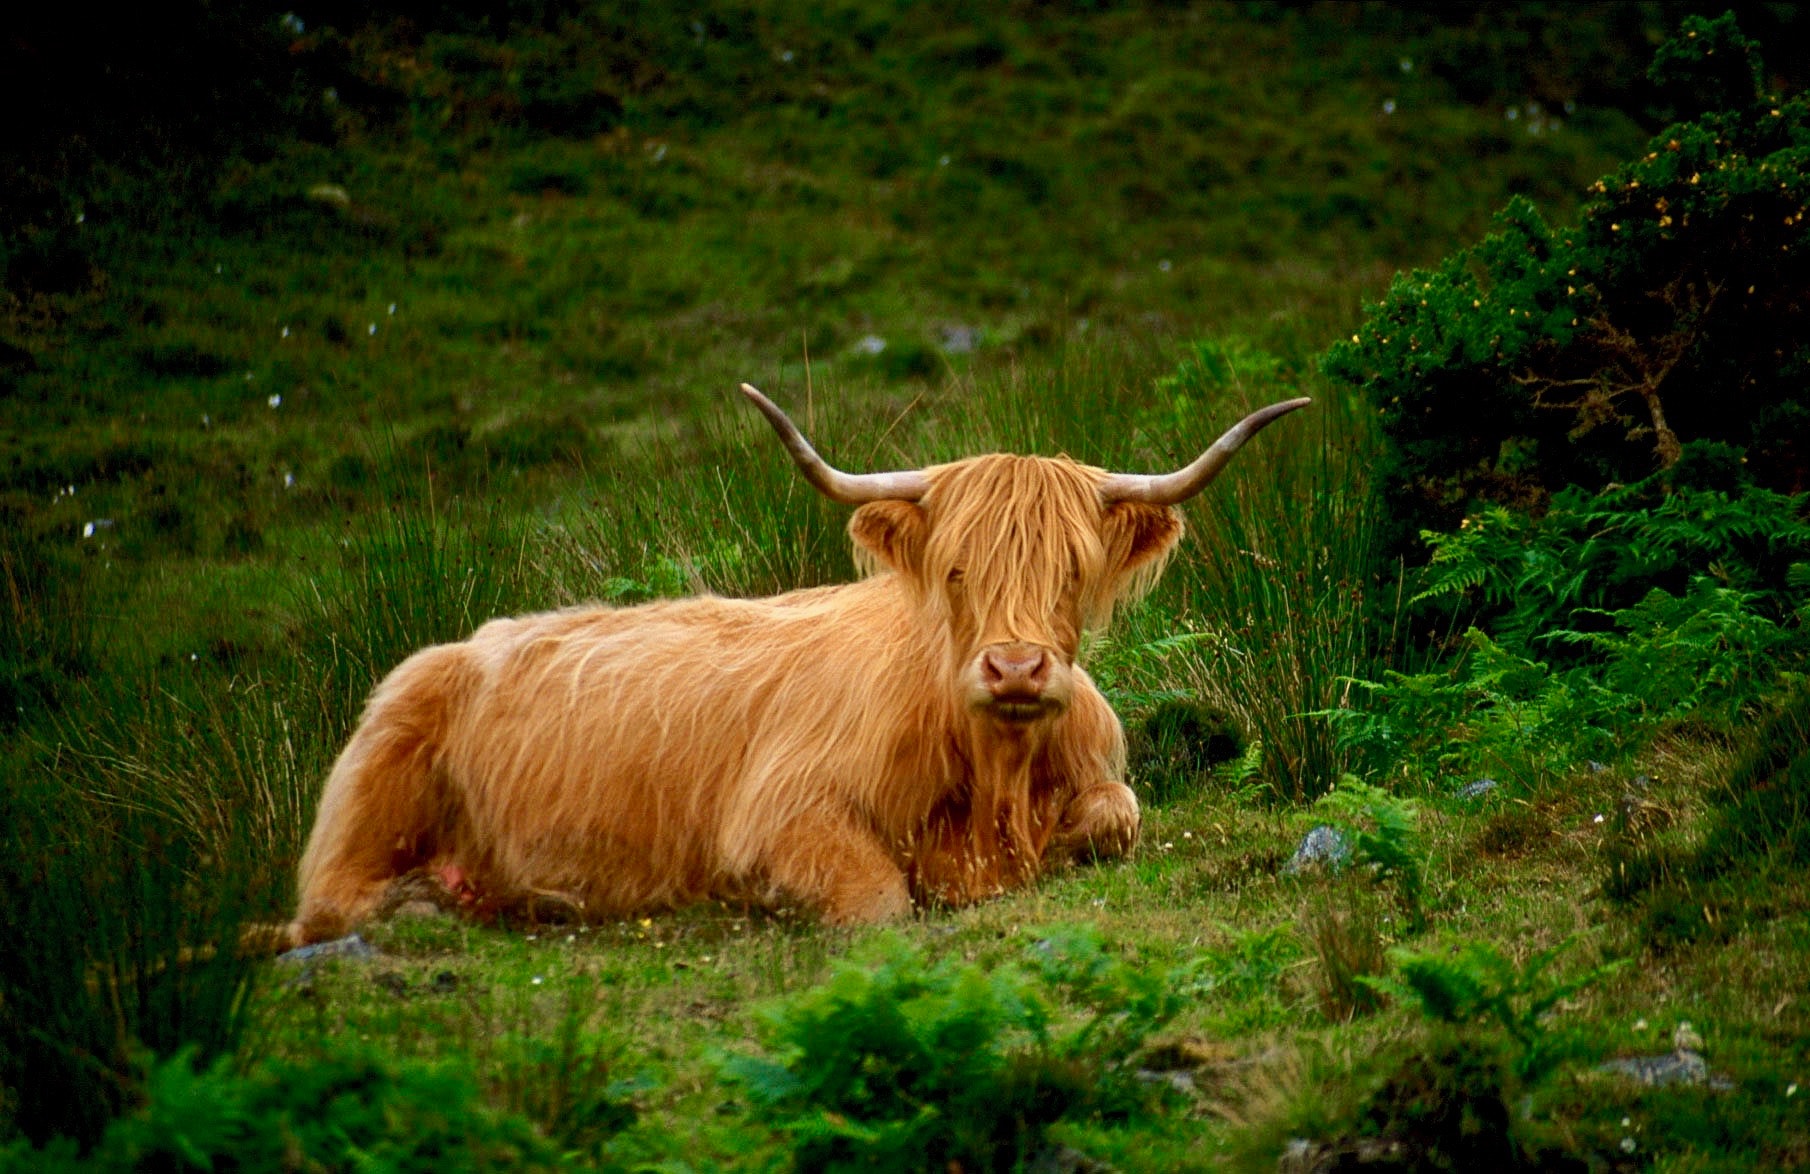 Brown bison on grass photo